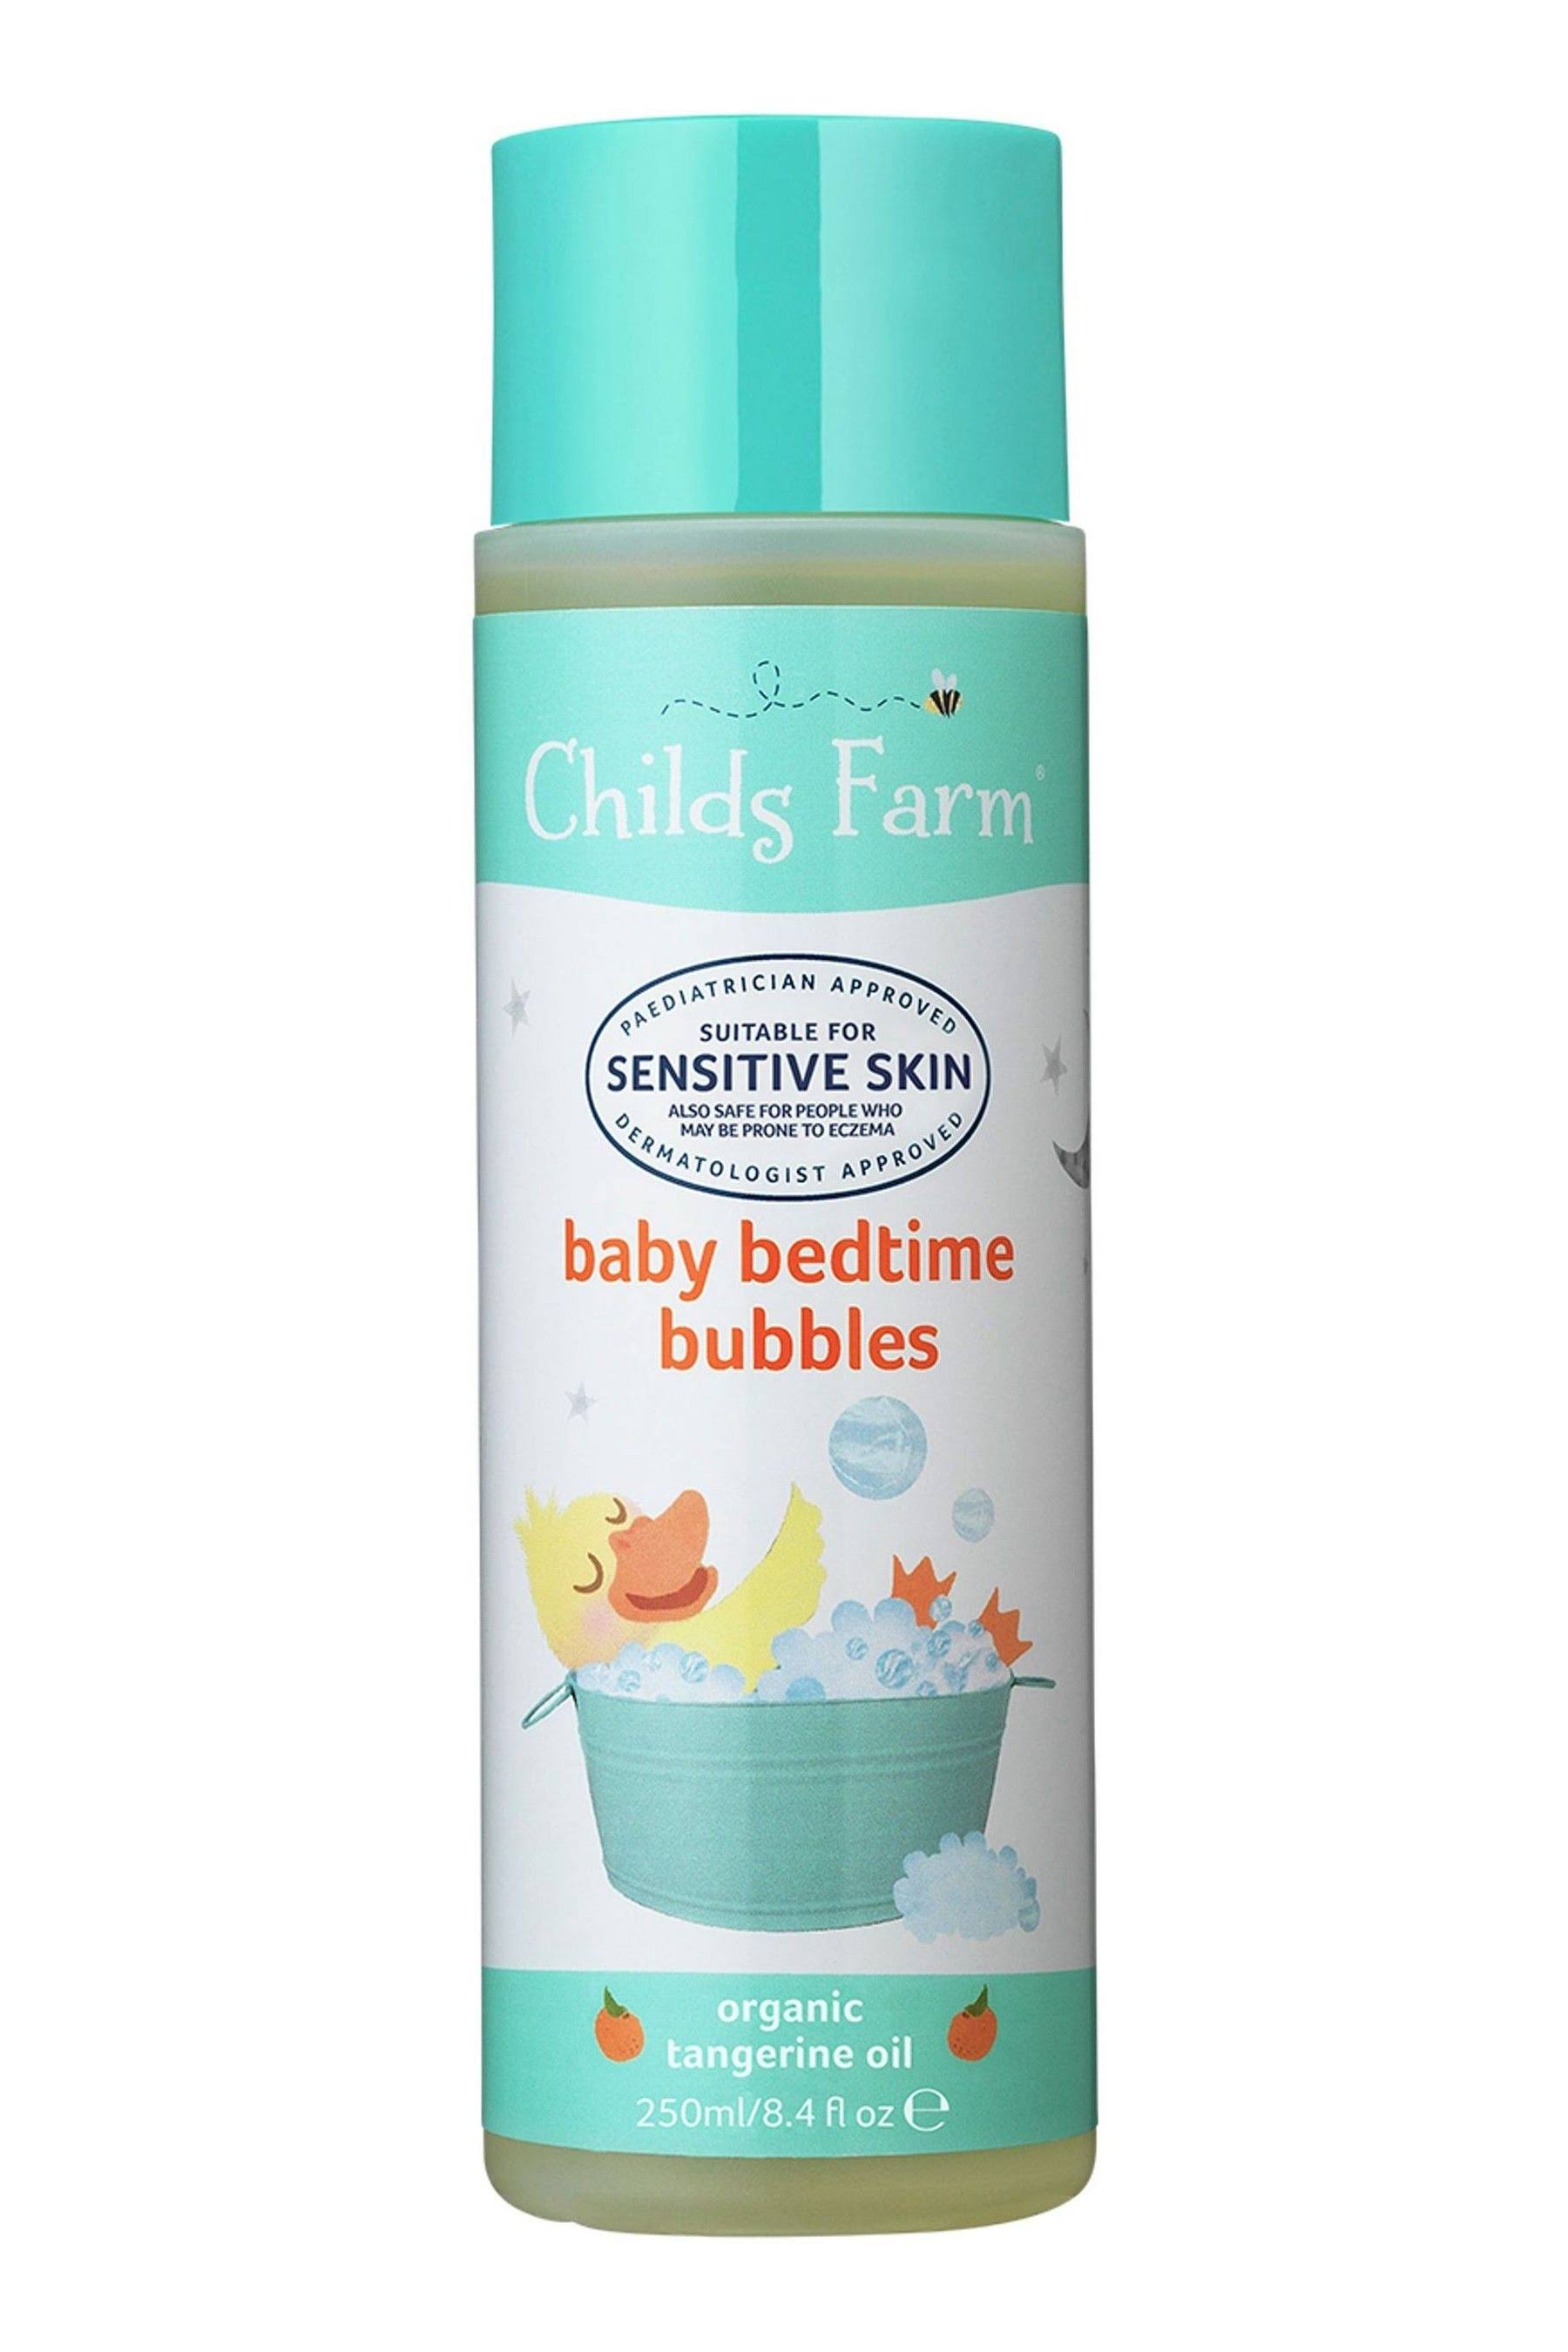 Childs Farm Baby Bedtime Bubbles - Organic Tangerine, 250ml